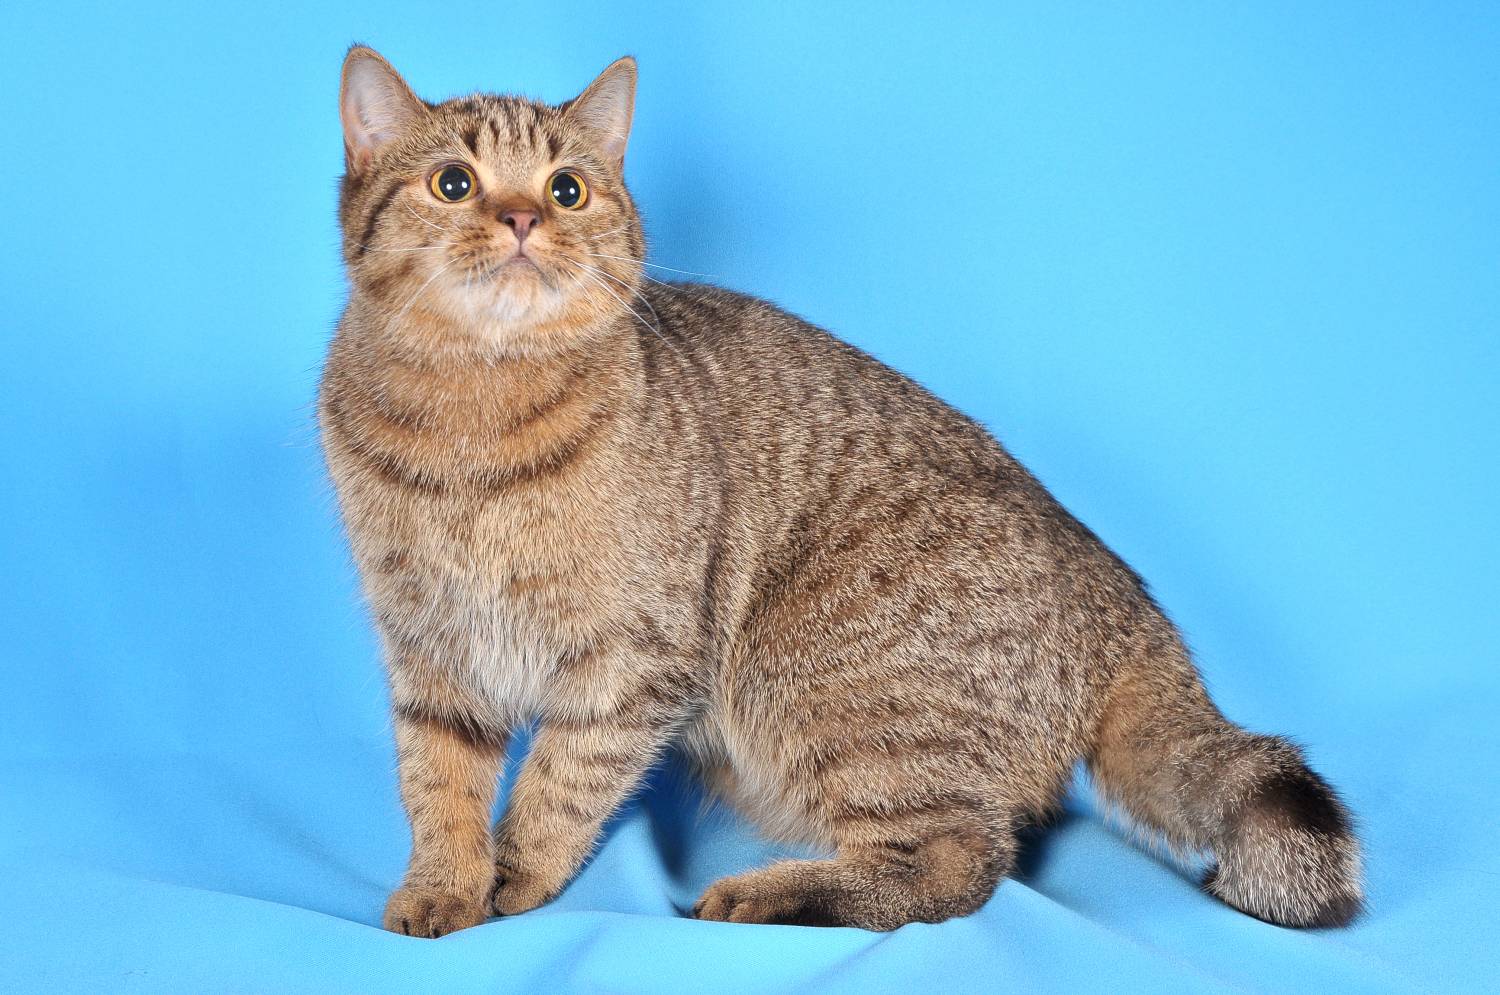 kucing-tabby-british-18-gambar-keterangan-kucing-perak-dan-marmar